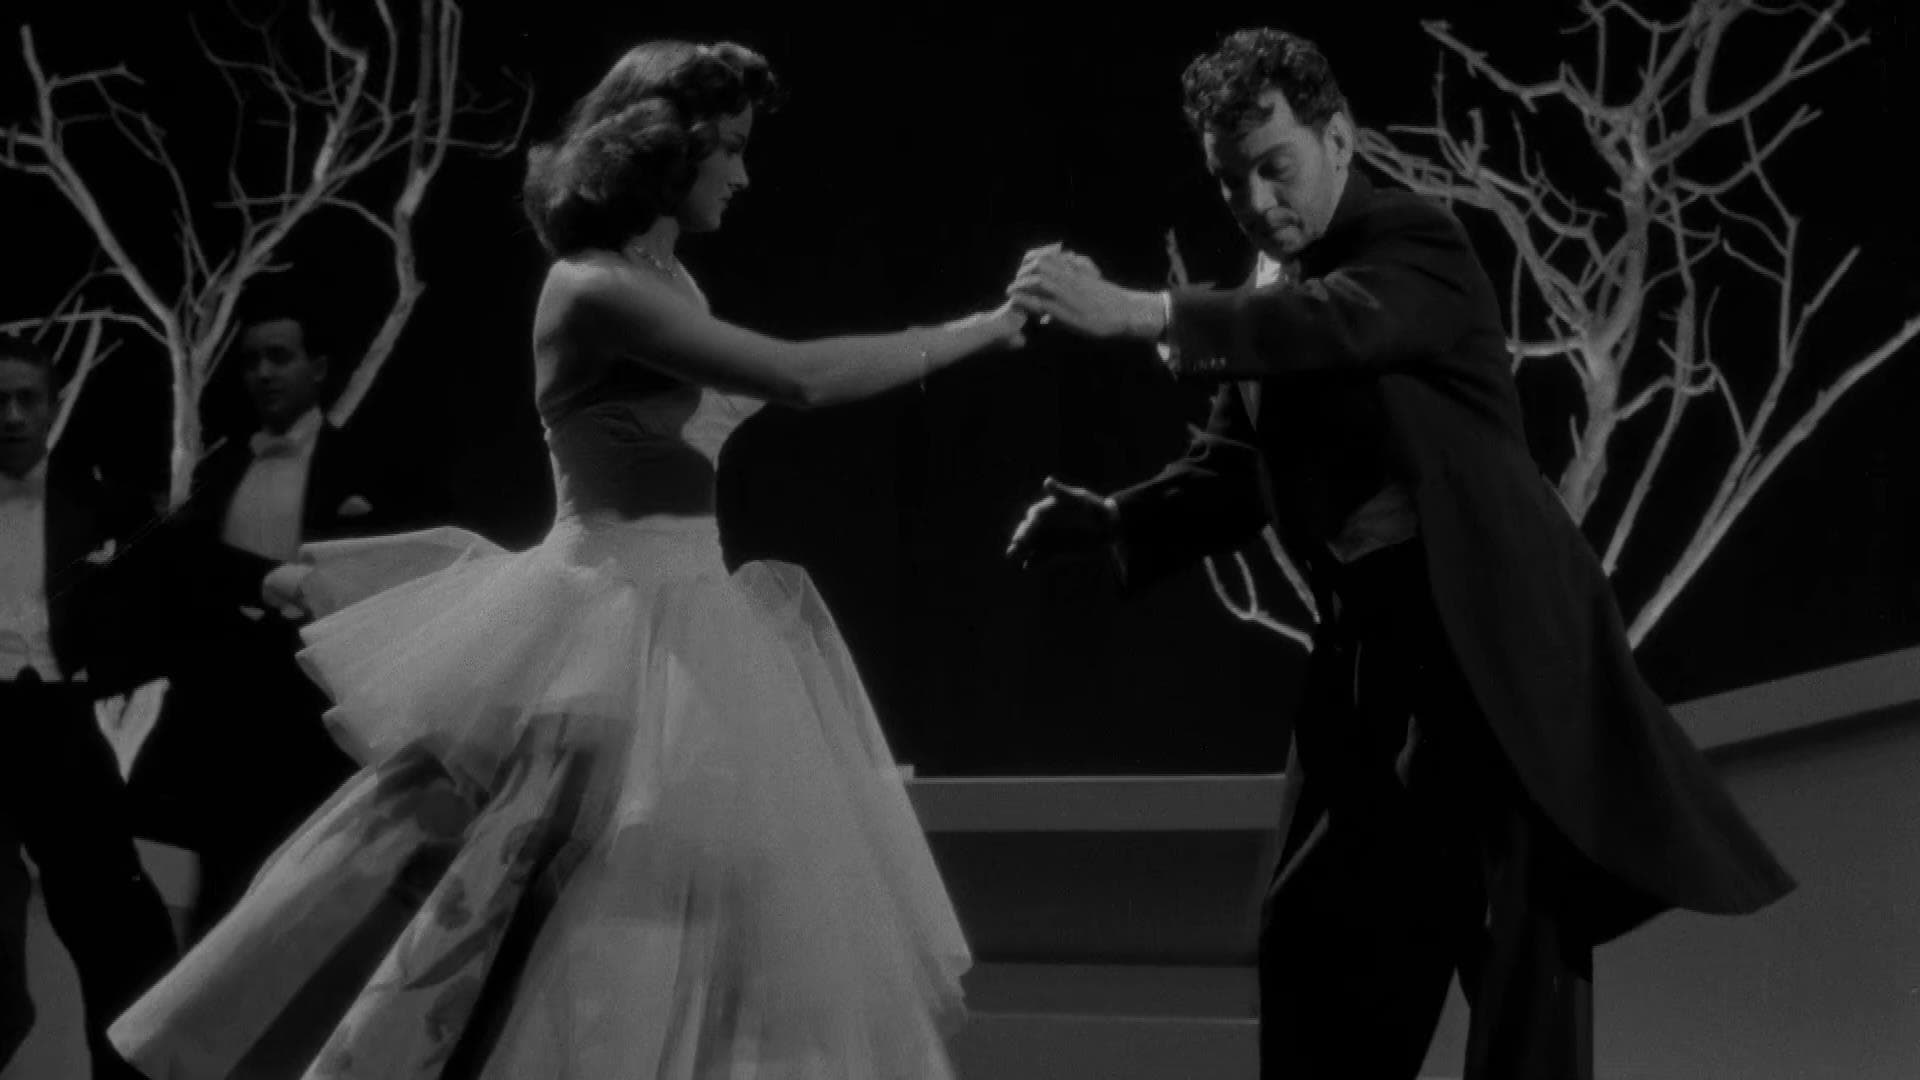 Drop the Curtain (1955)